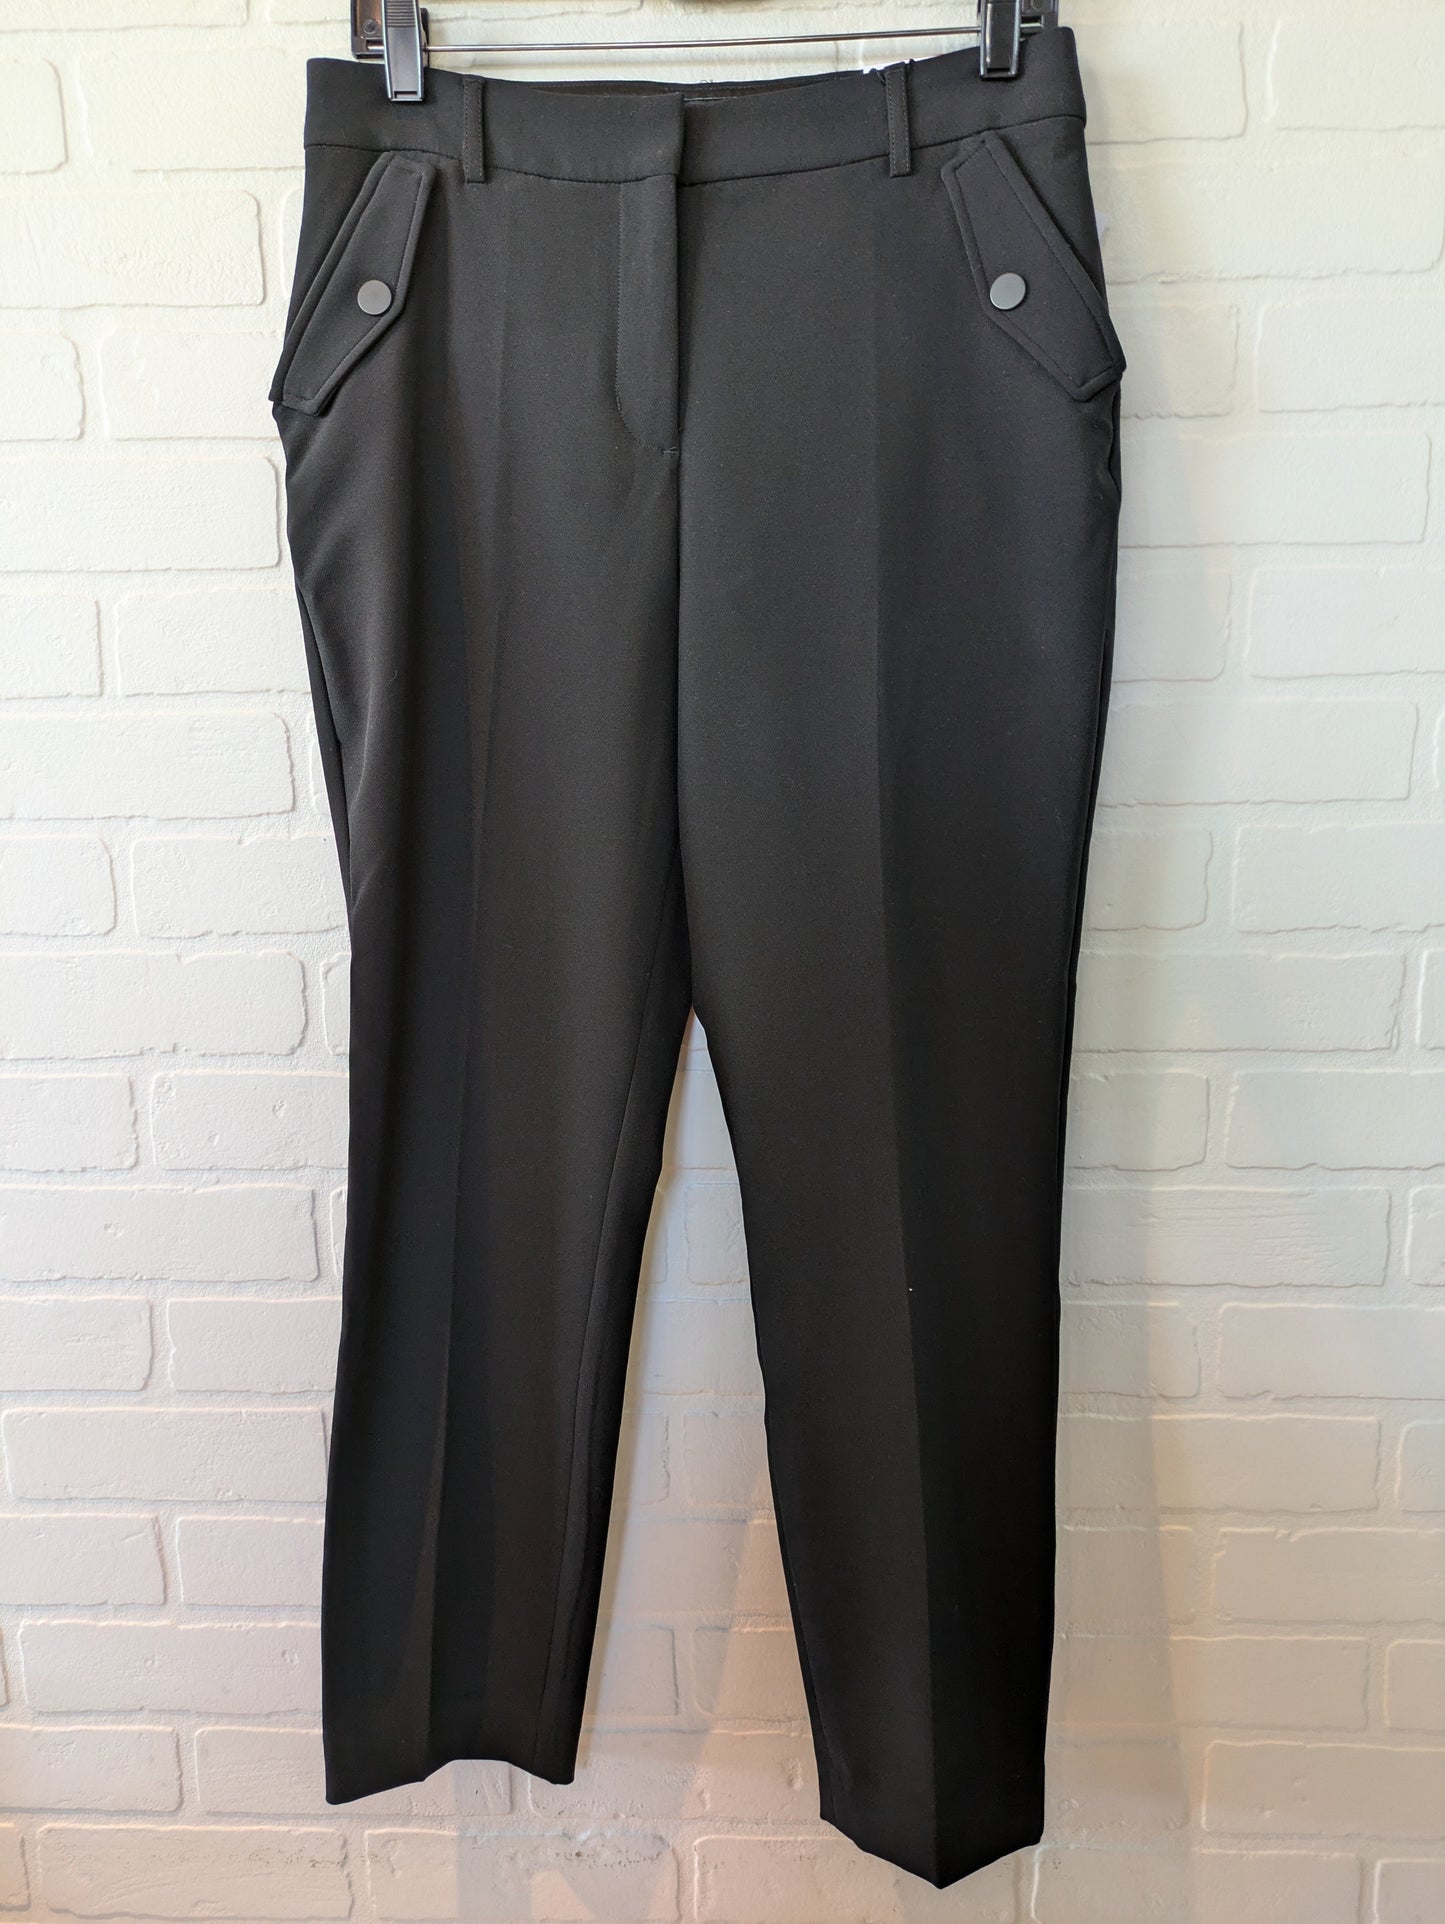 Black Pants Cropped Express, Size 8